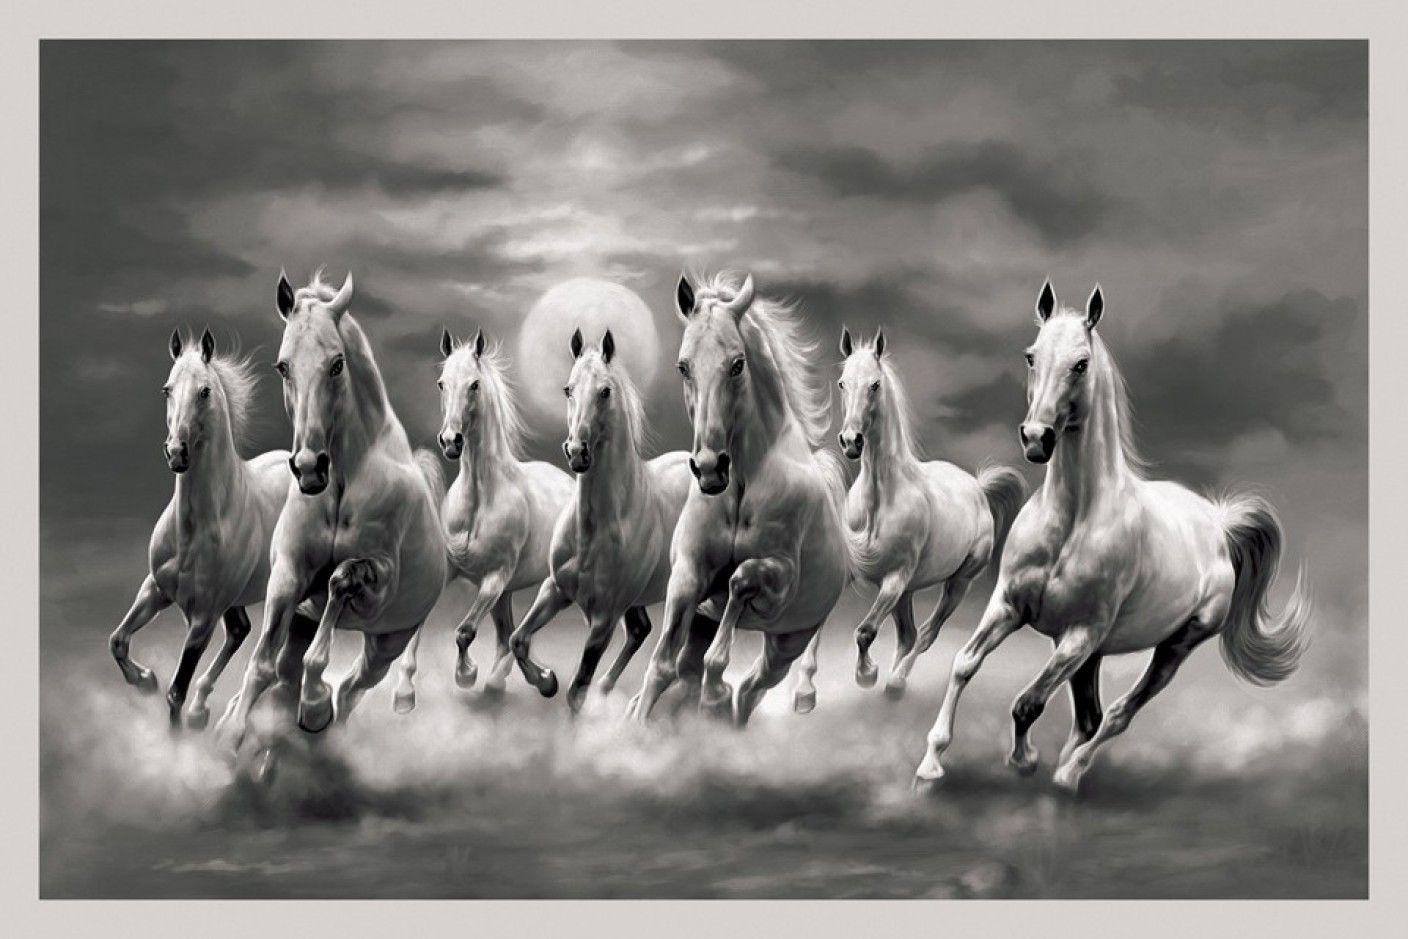 Seven Horses Wallpapers - Top Free Seven Horses Backgrounds ...